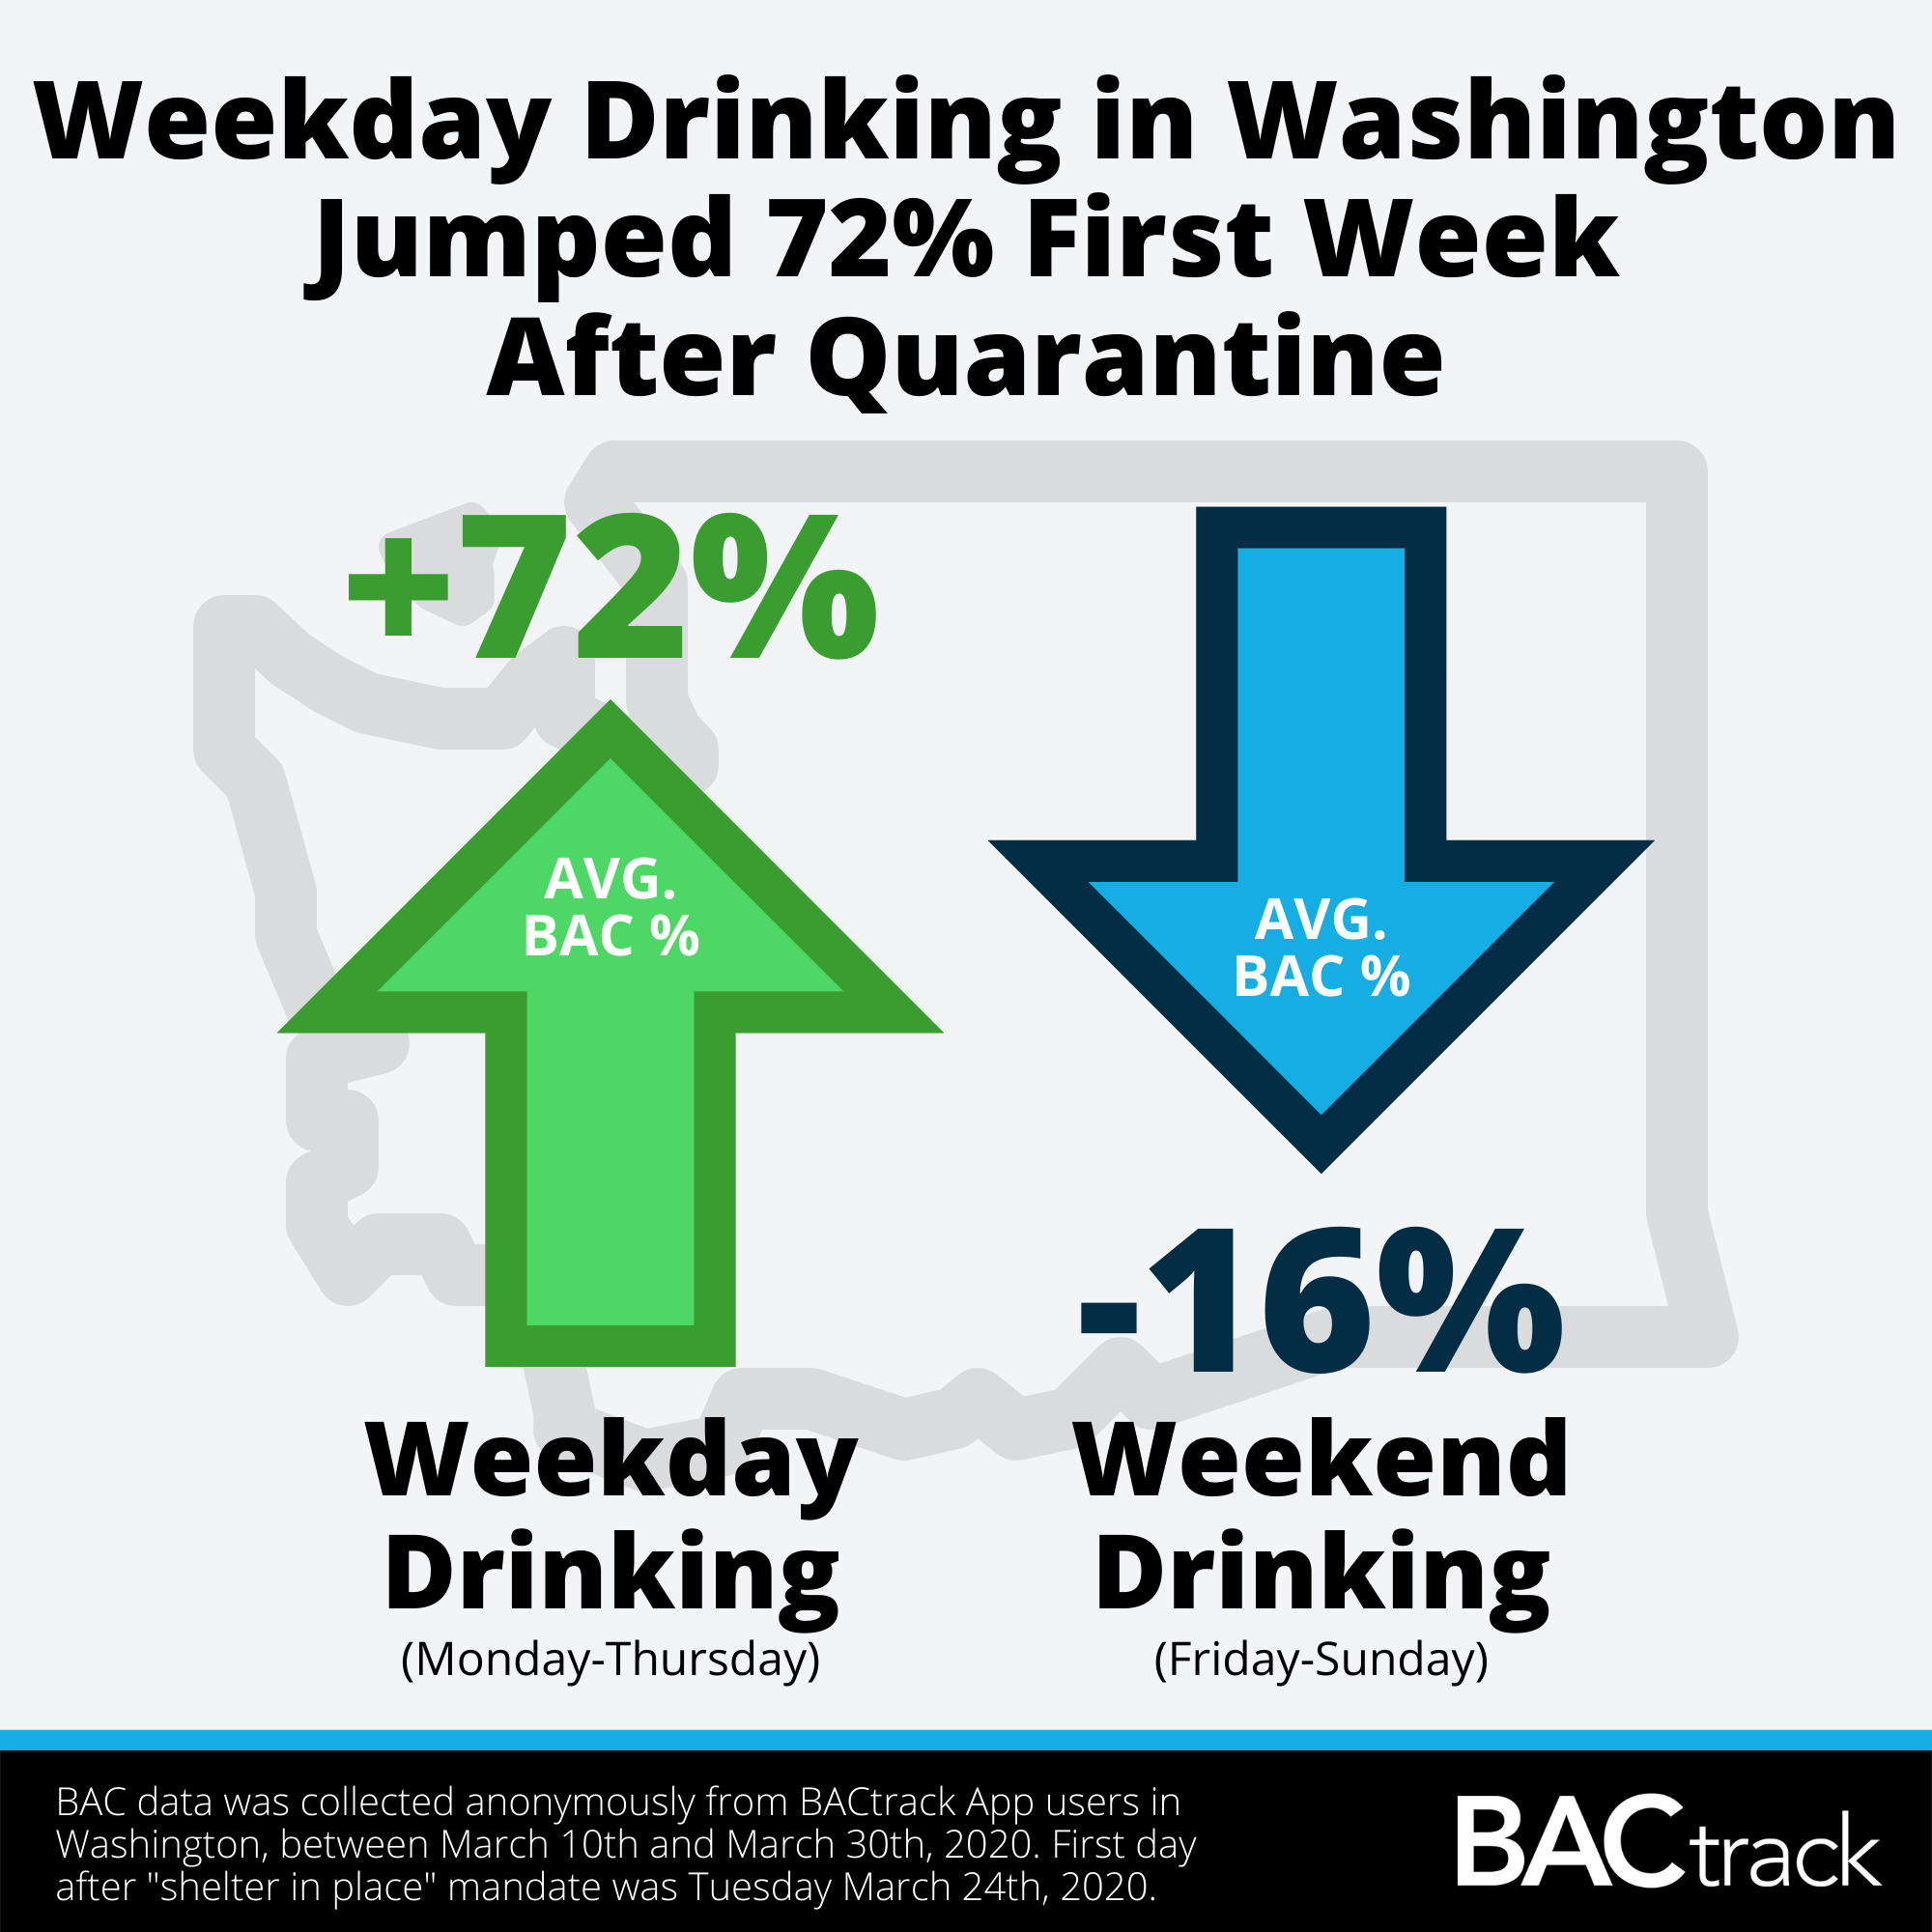 In Washington, weekday drinking increases while weekend drinking decreases.